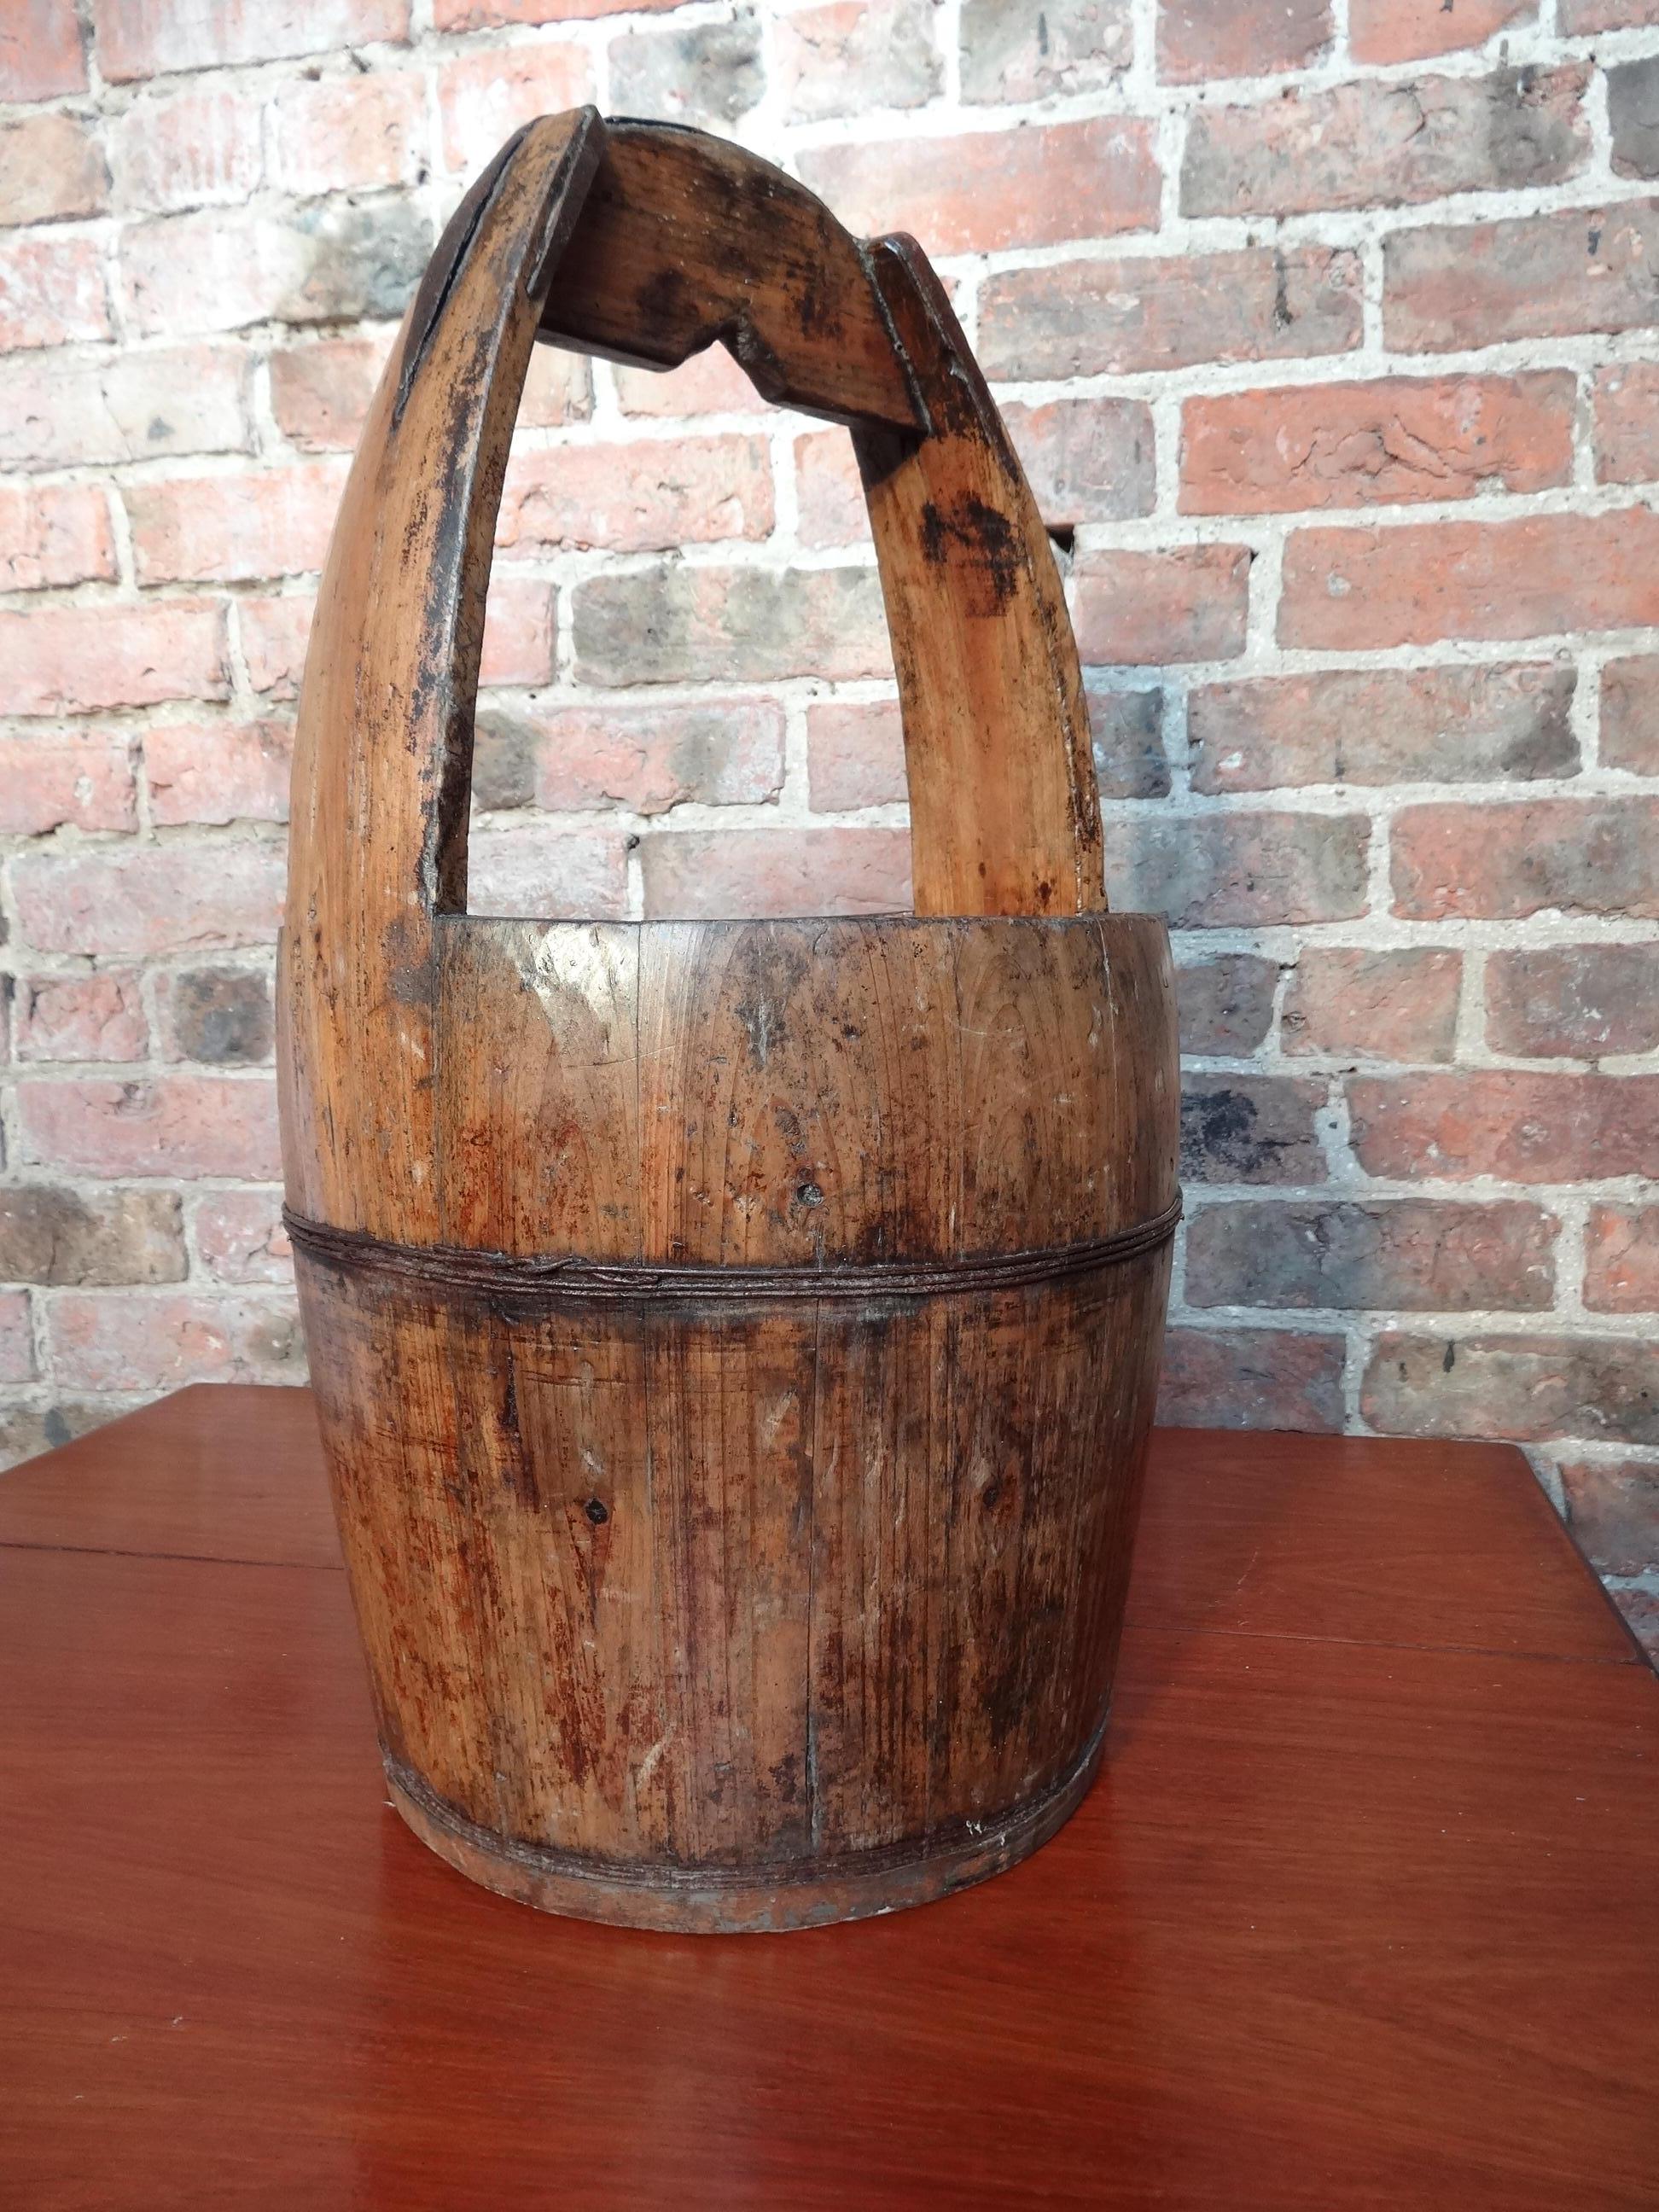 2 antique Chinese water bucket in dark and light wood

Measures: Height: 58cm, depth: 34cm, width: 34cm.